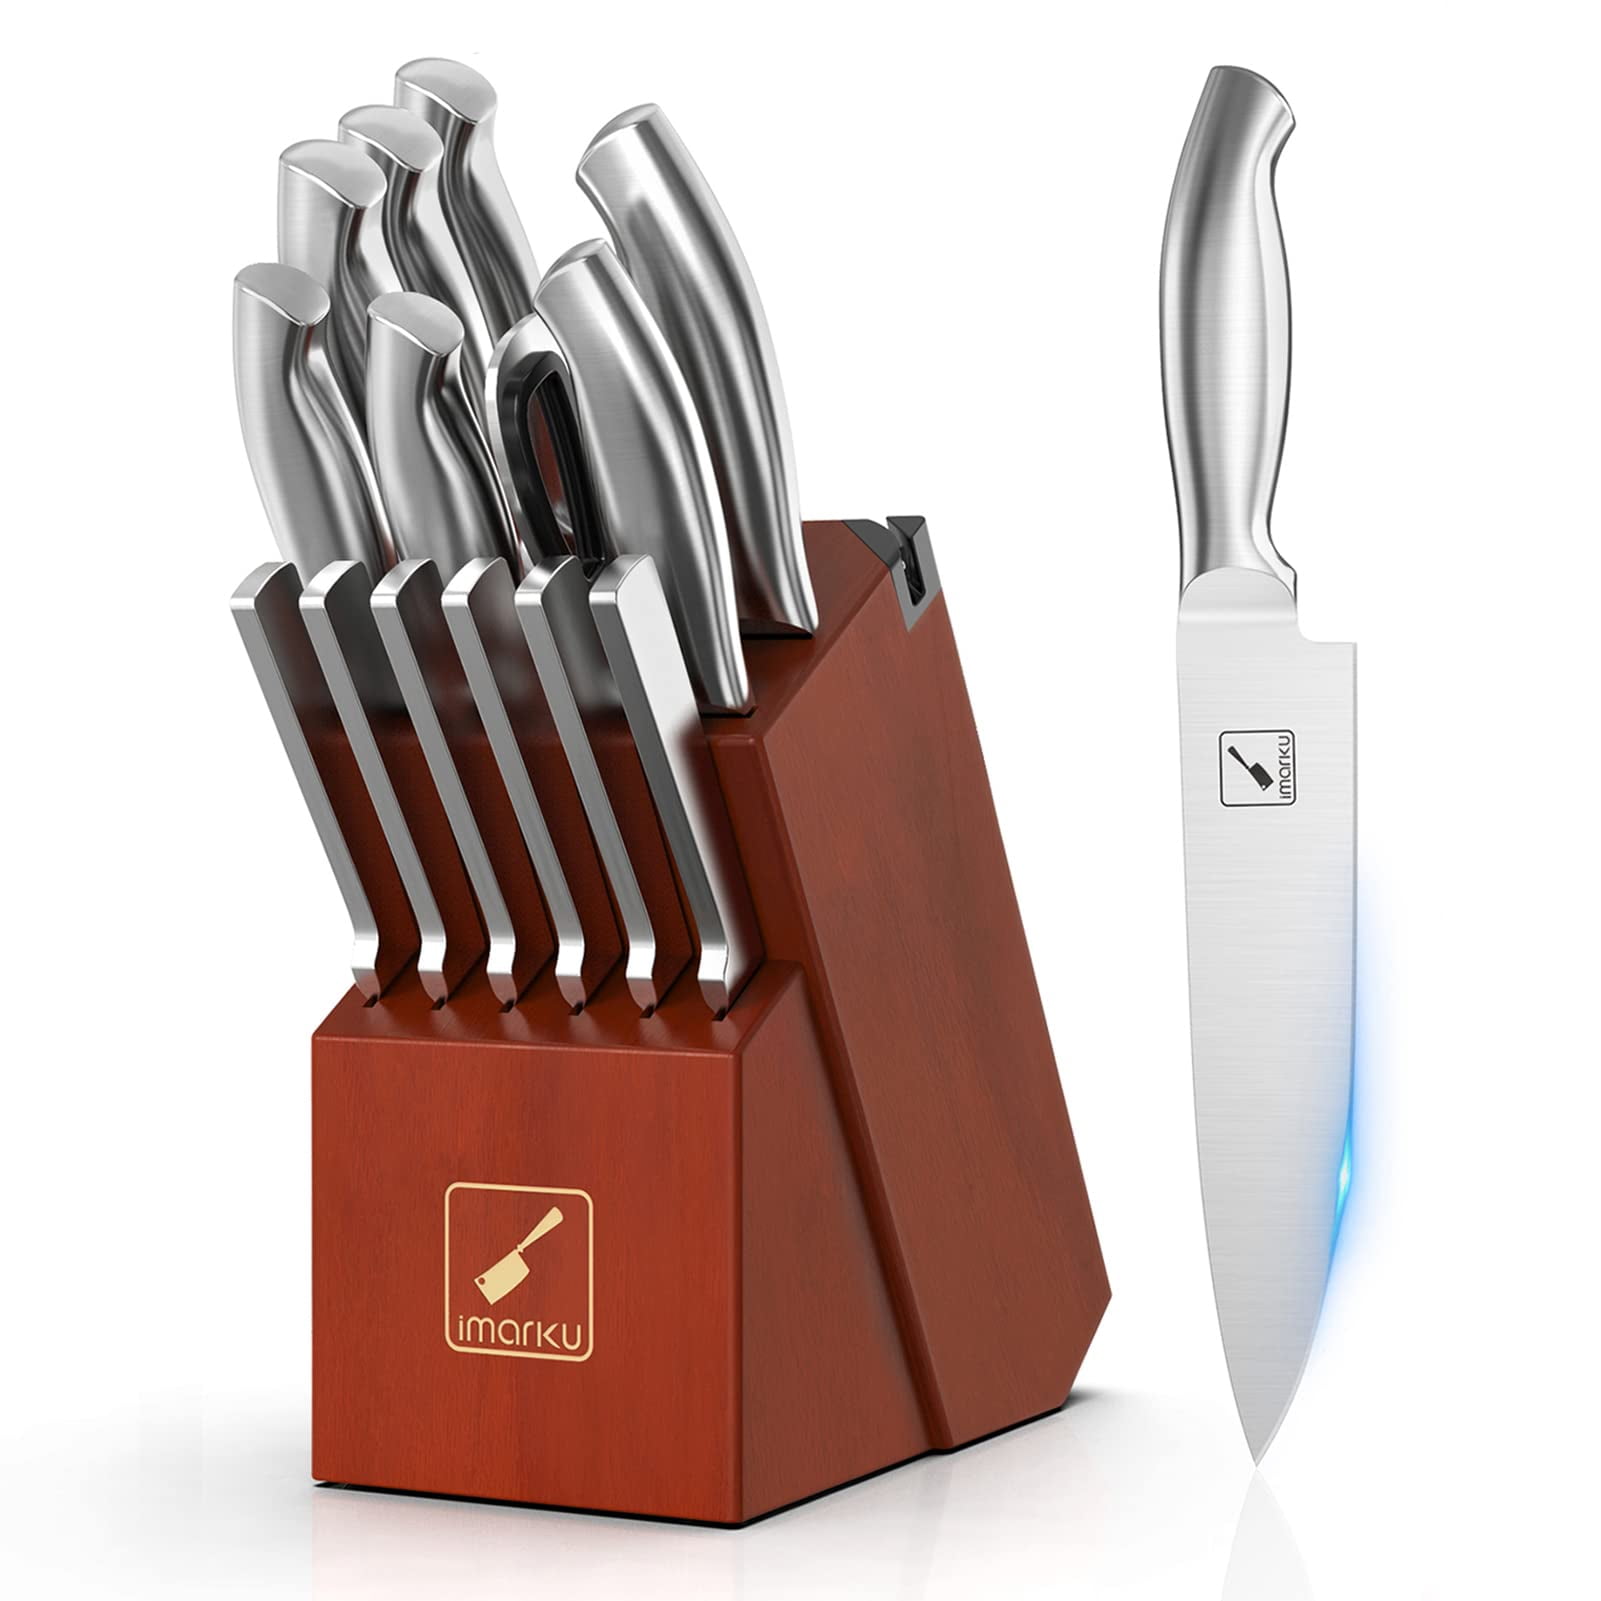 imarku 4.5-Inch Steak Knives Set of 6, German Carbon Stainless Serrated  Edge - IMARKU